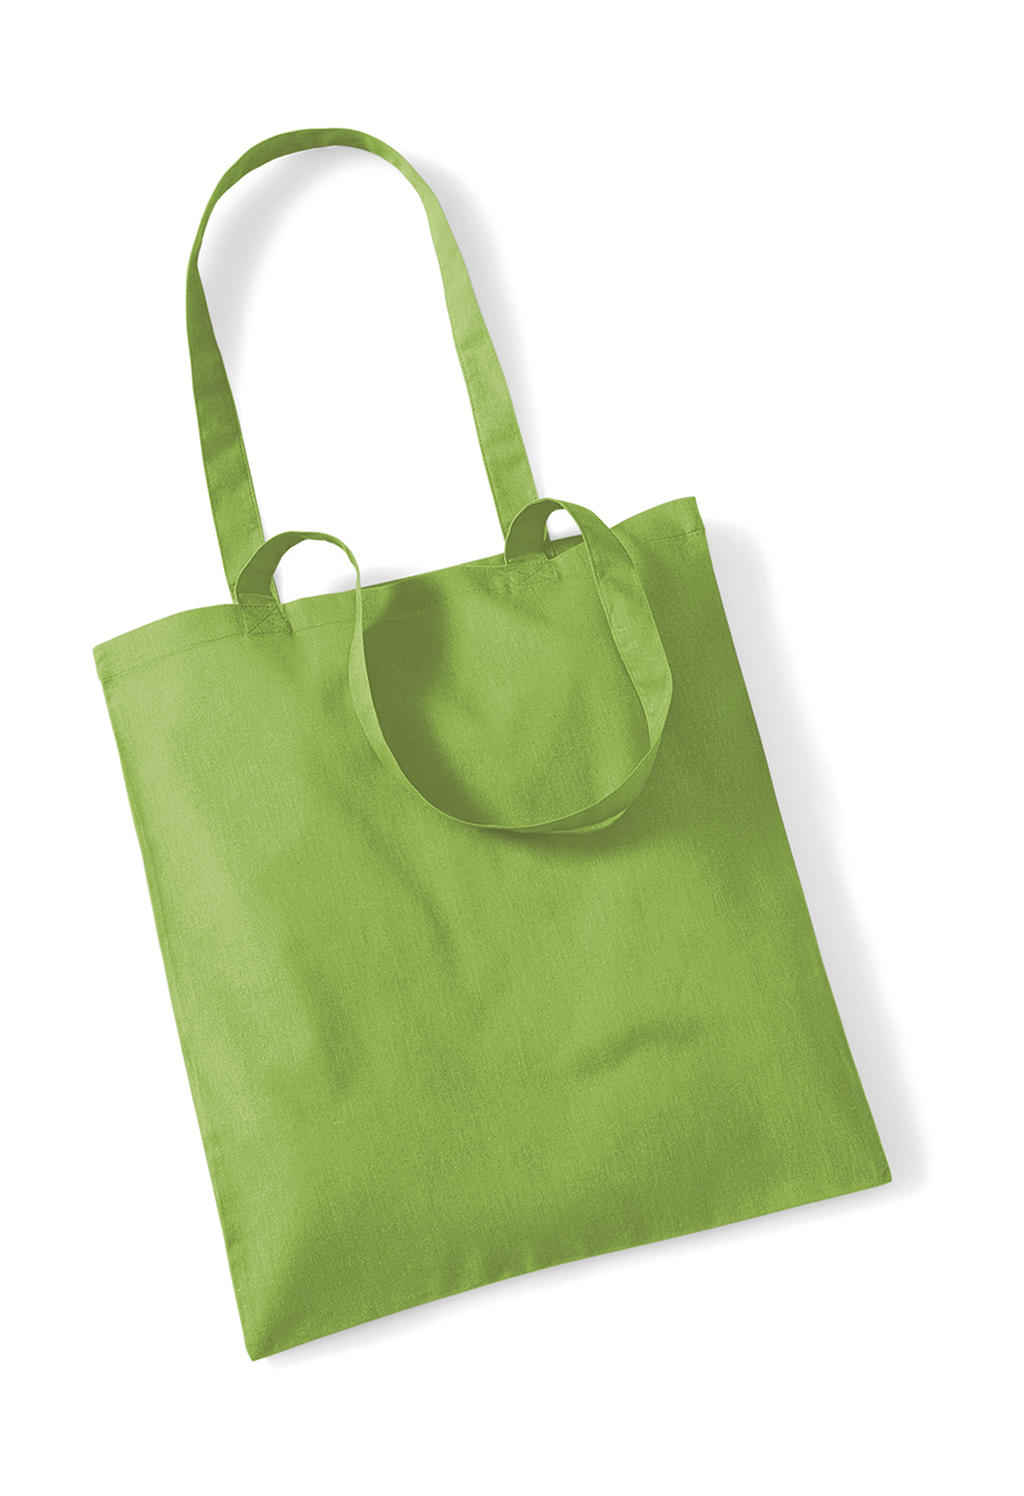  Bag for Life - Long Handles in Farbe Kiwi